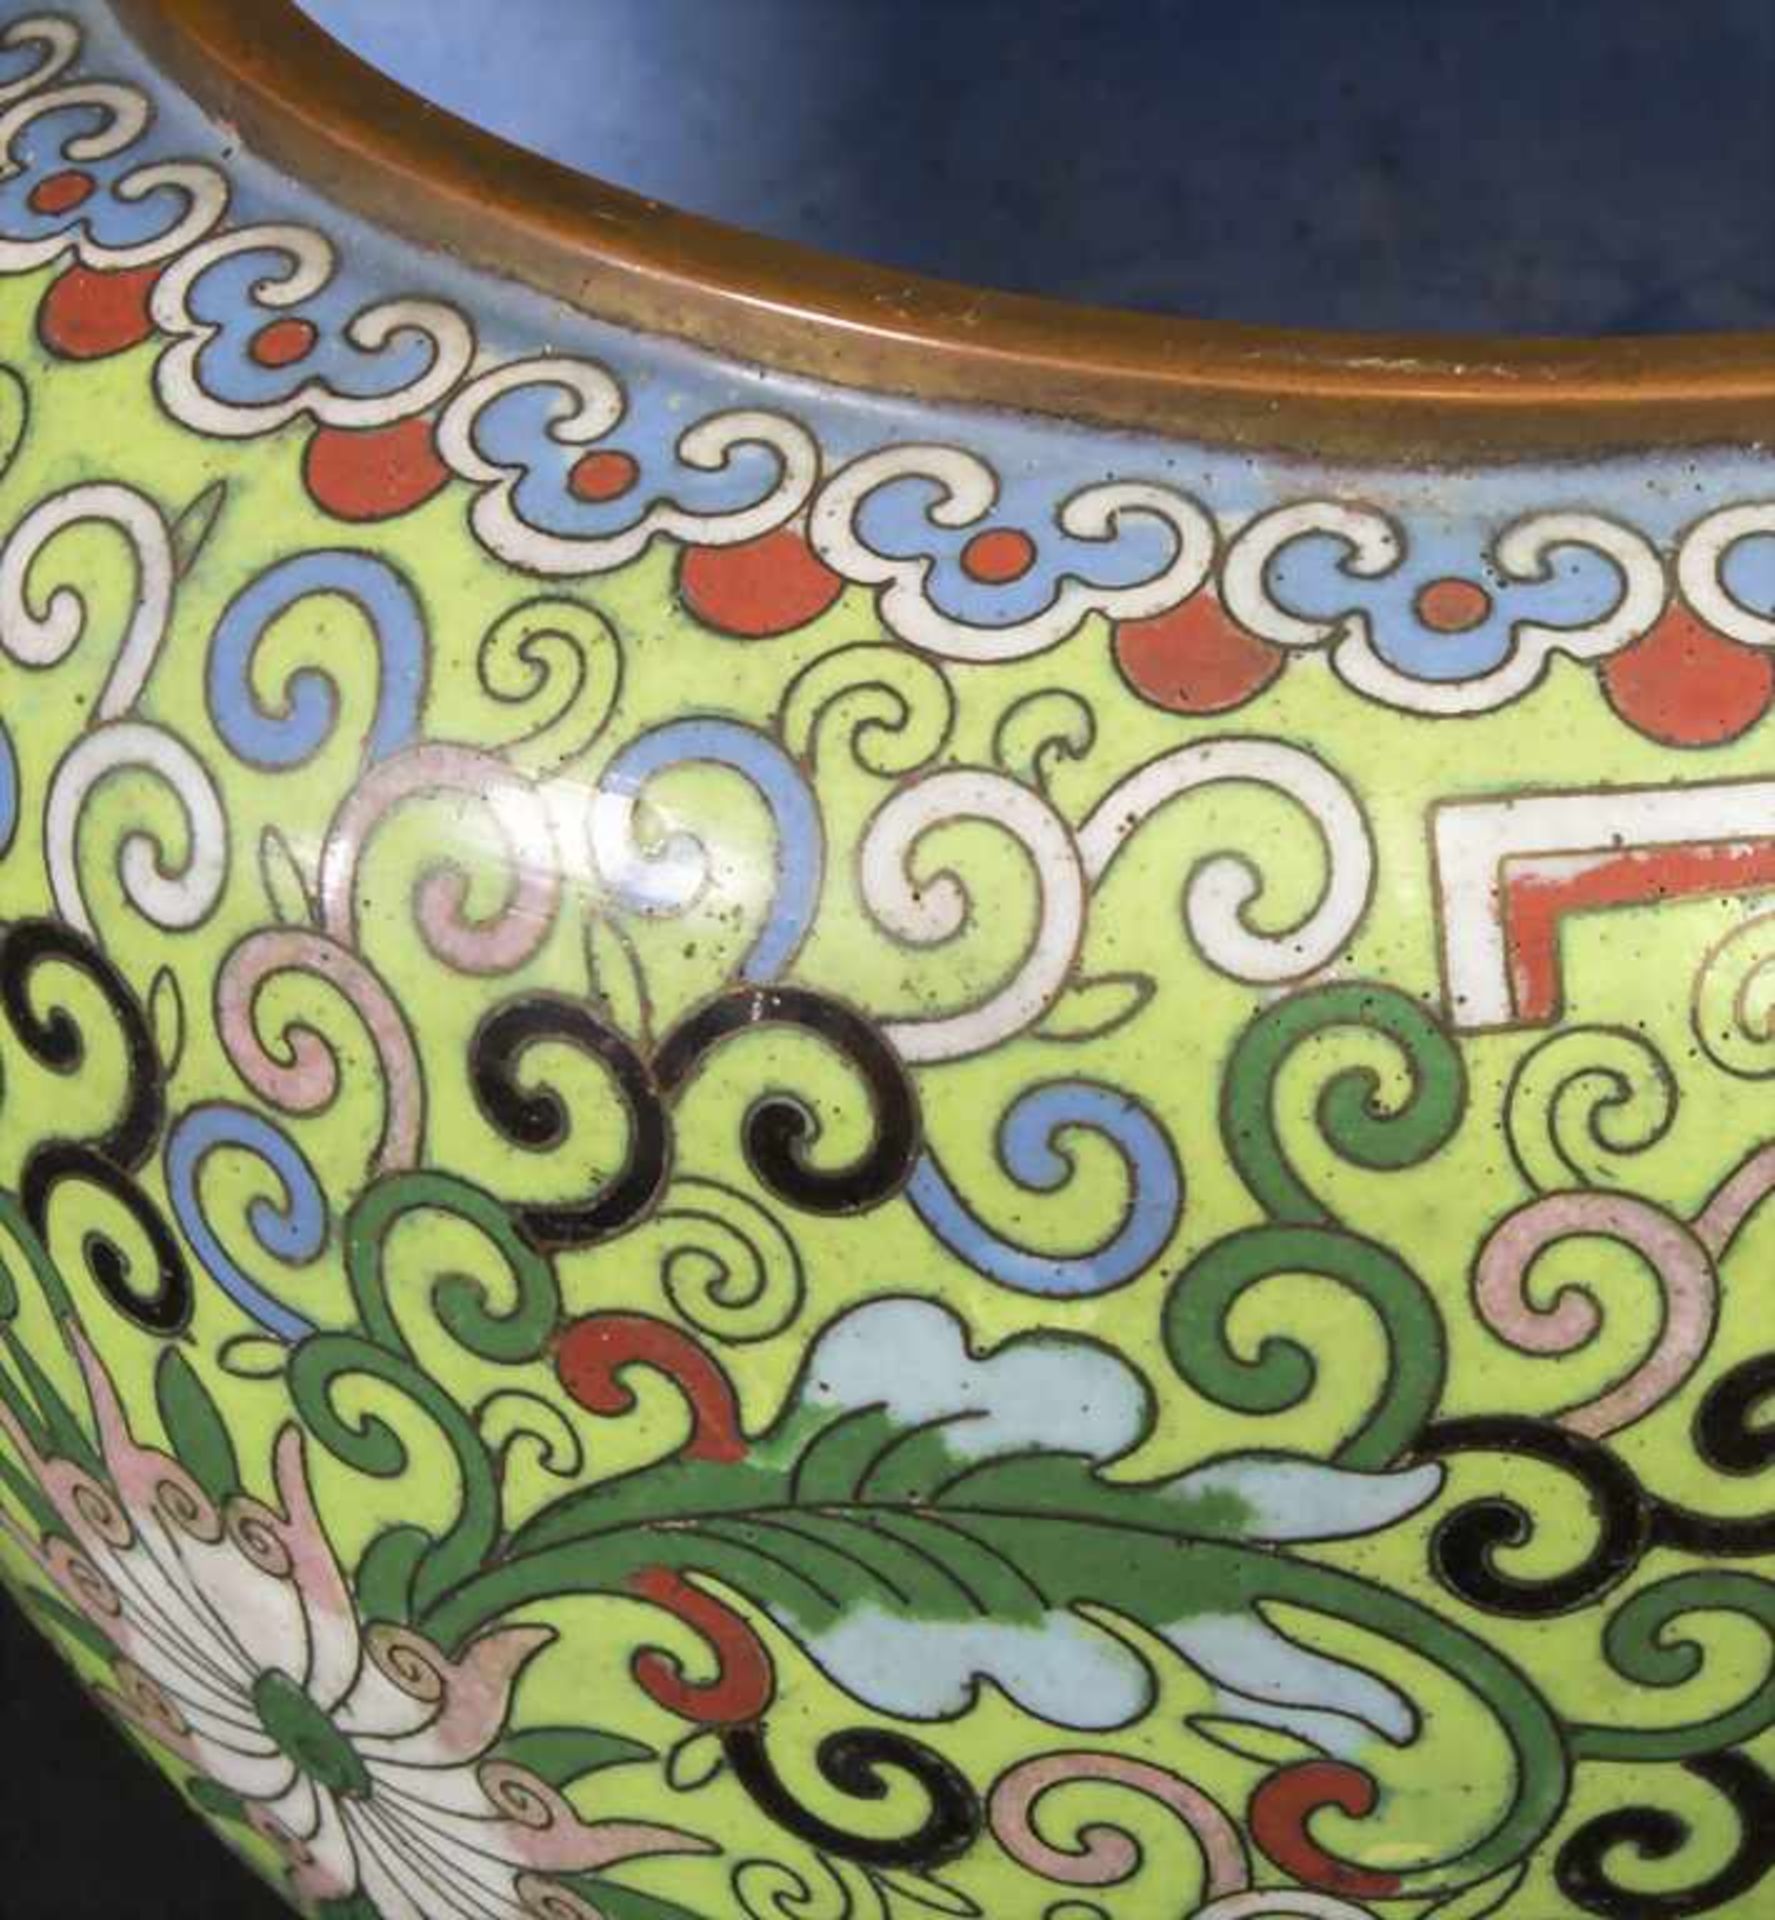 Cloisonné-Ziervase / An enamelled decorative vase, China, Qing-Dynastie (1644-1911), 19. Jh. - Image 7 of 7